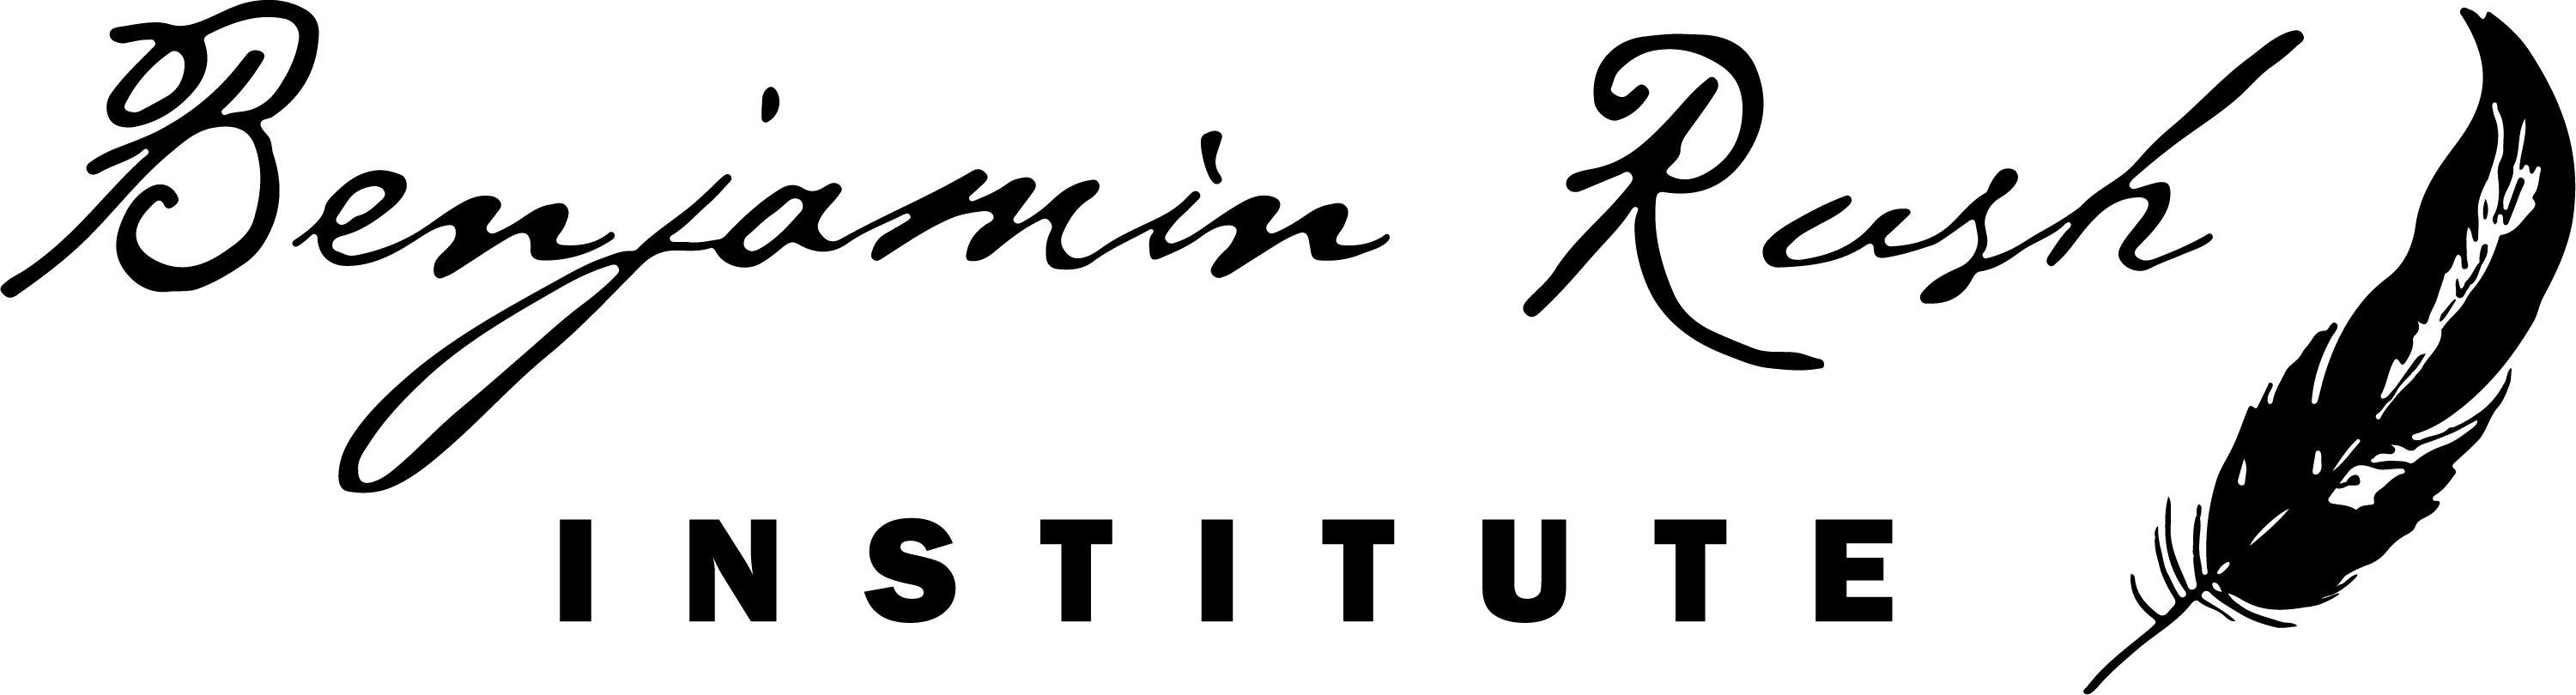 Benjamin Rush Institute